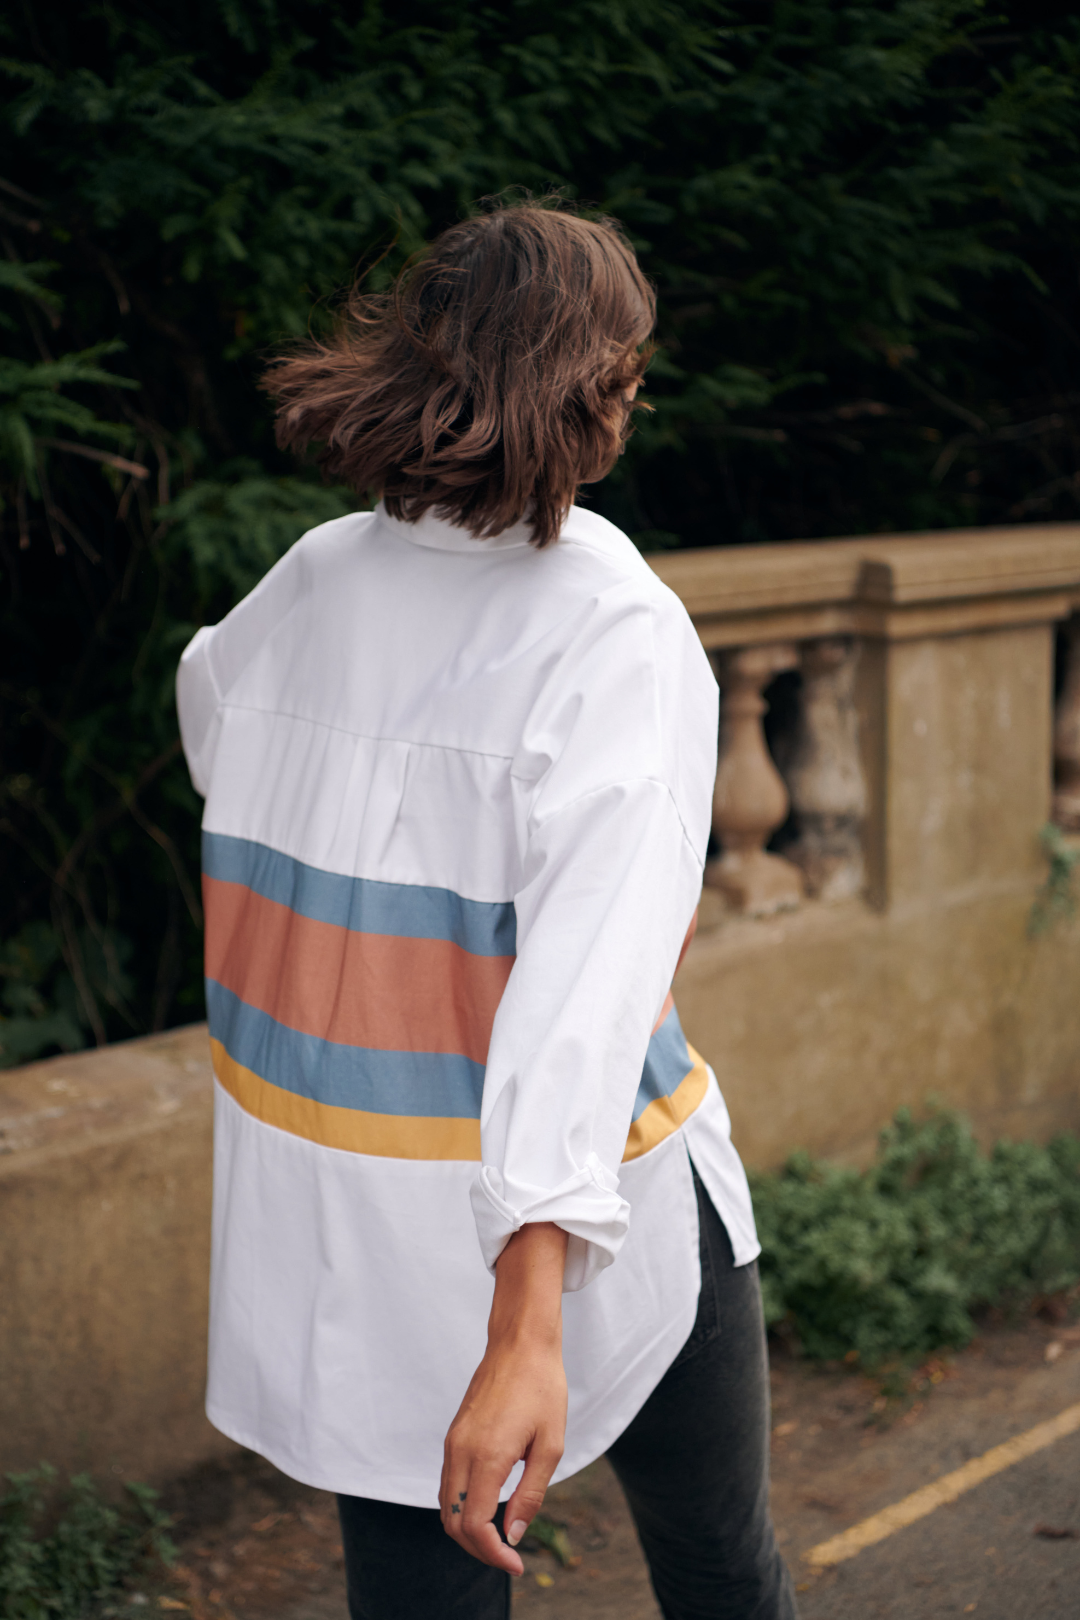 The Maria Anna Shirt: Italian Inspired Colour Block